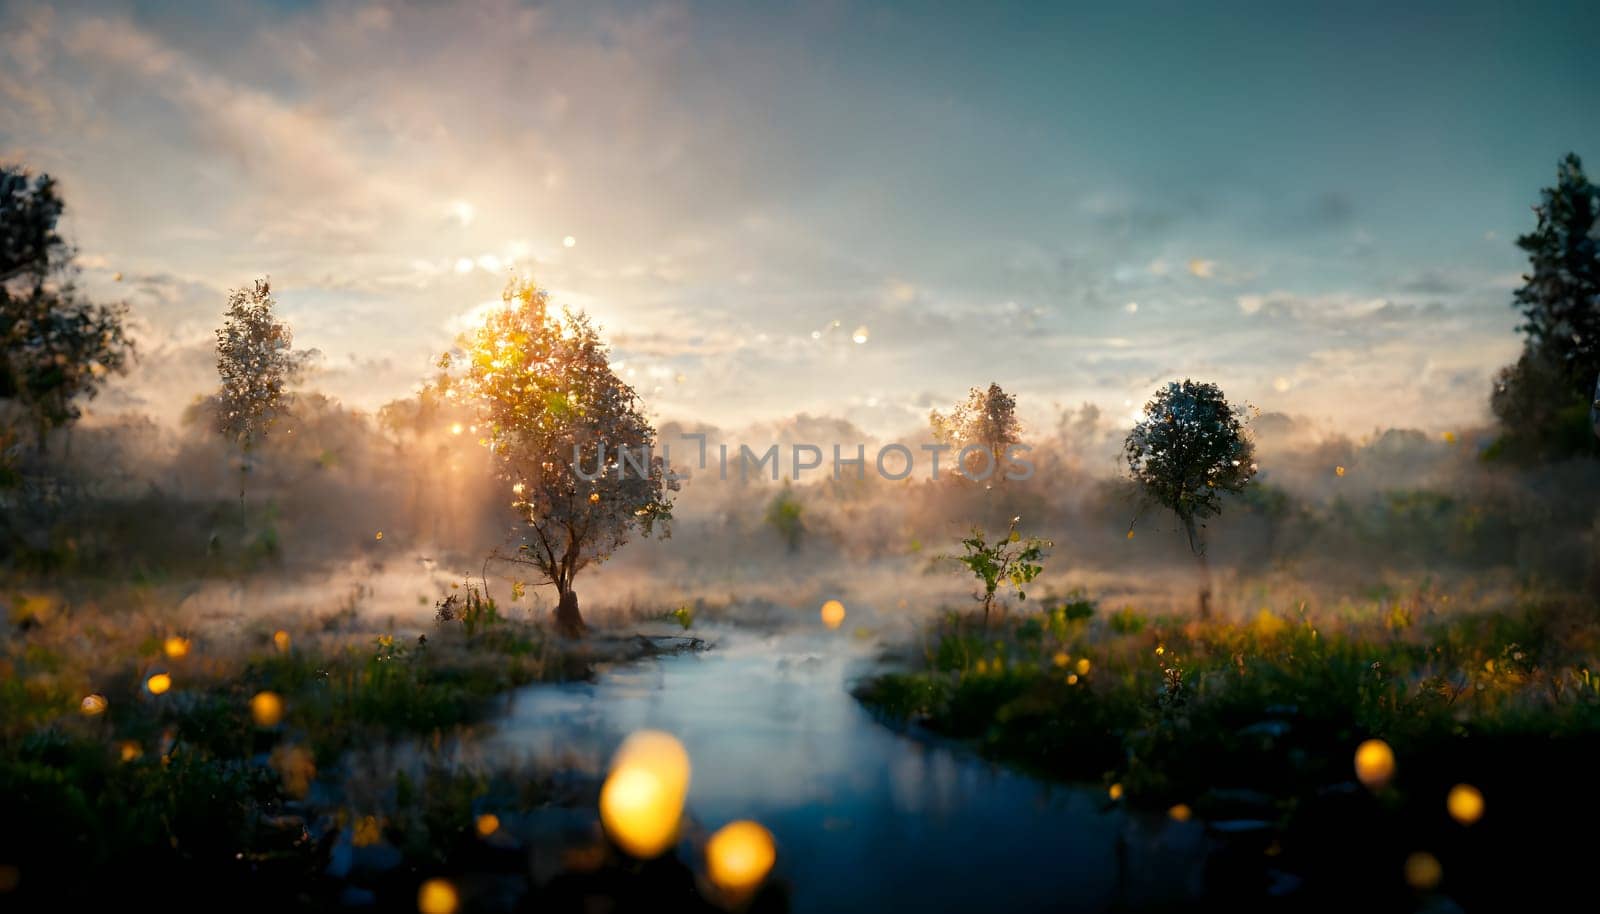 dreamy summer wild riverside morning landscape, neural network generated art by z1b